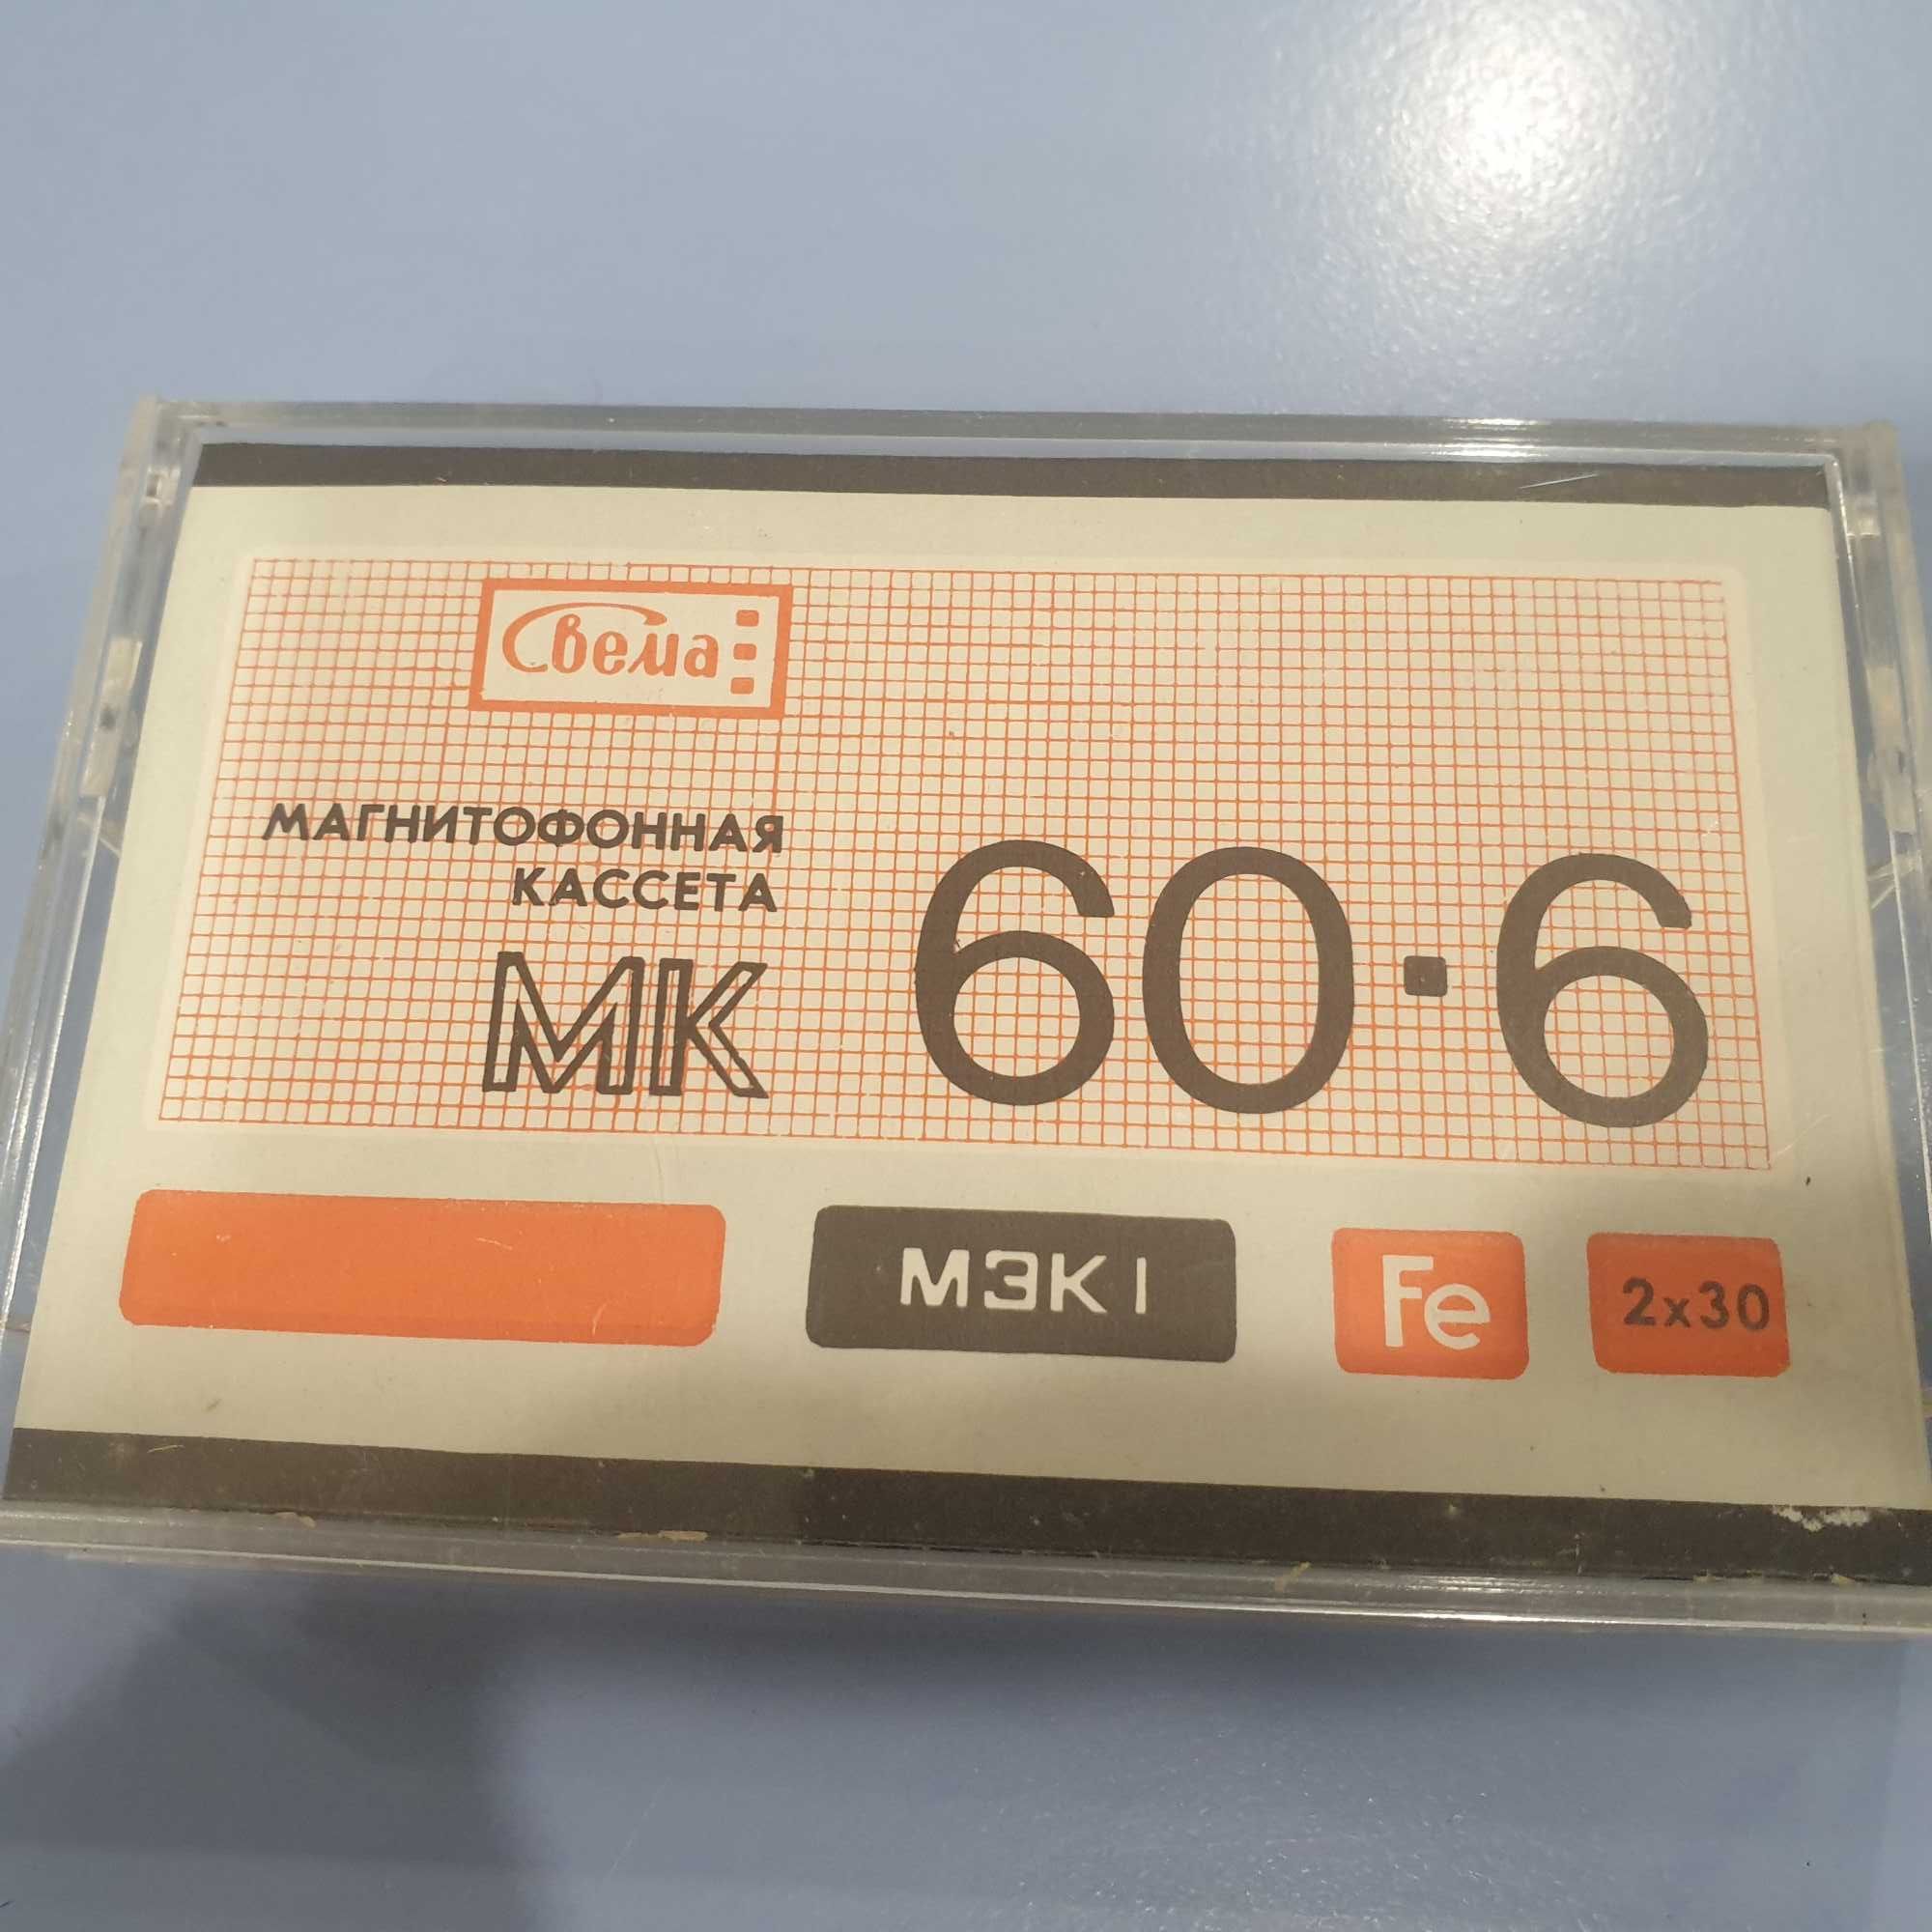 Kasety magnetofonowe radzieckie Svema MK 60-6